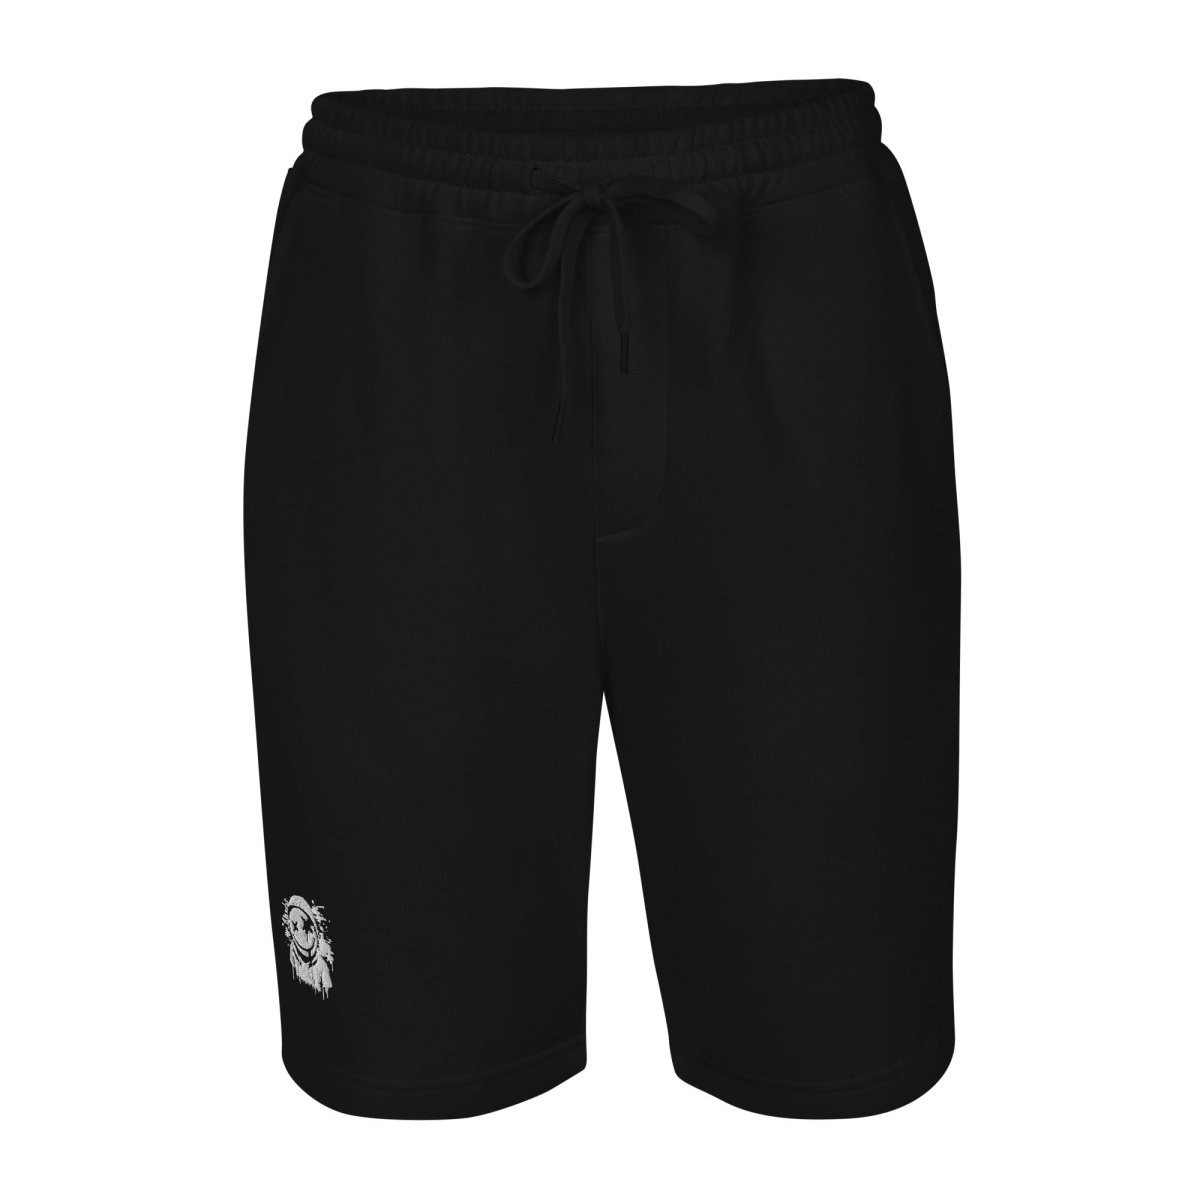 MH Classic Shorts Black - Mainly High